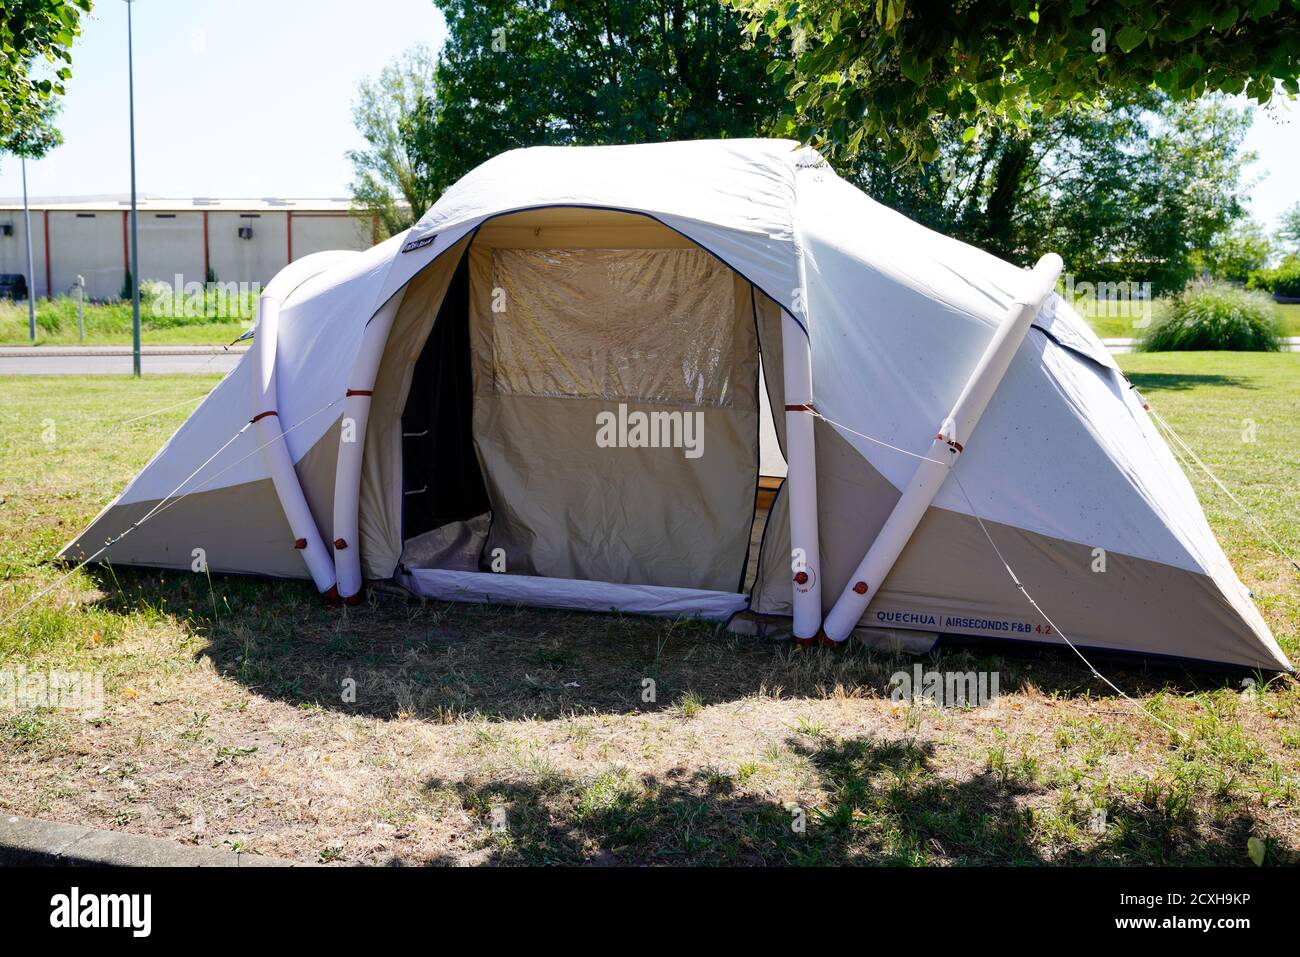 Bordeaux , Aquitaine / France - 09 25 2020 : Decathlon quechua airseconds  f&b 4.2 tourist camping tent inflatable new model Stock Photo - Alamy